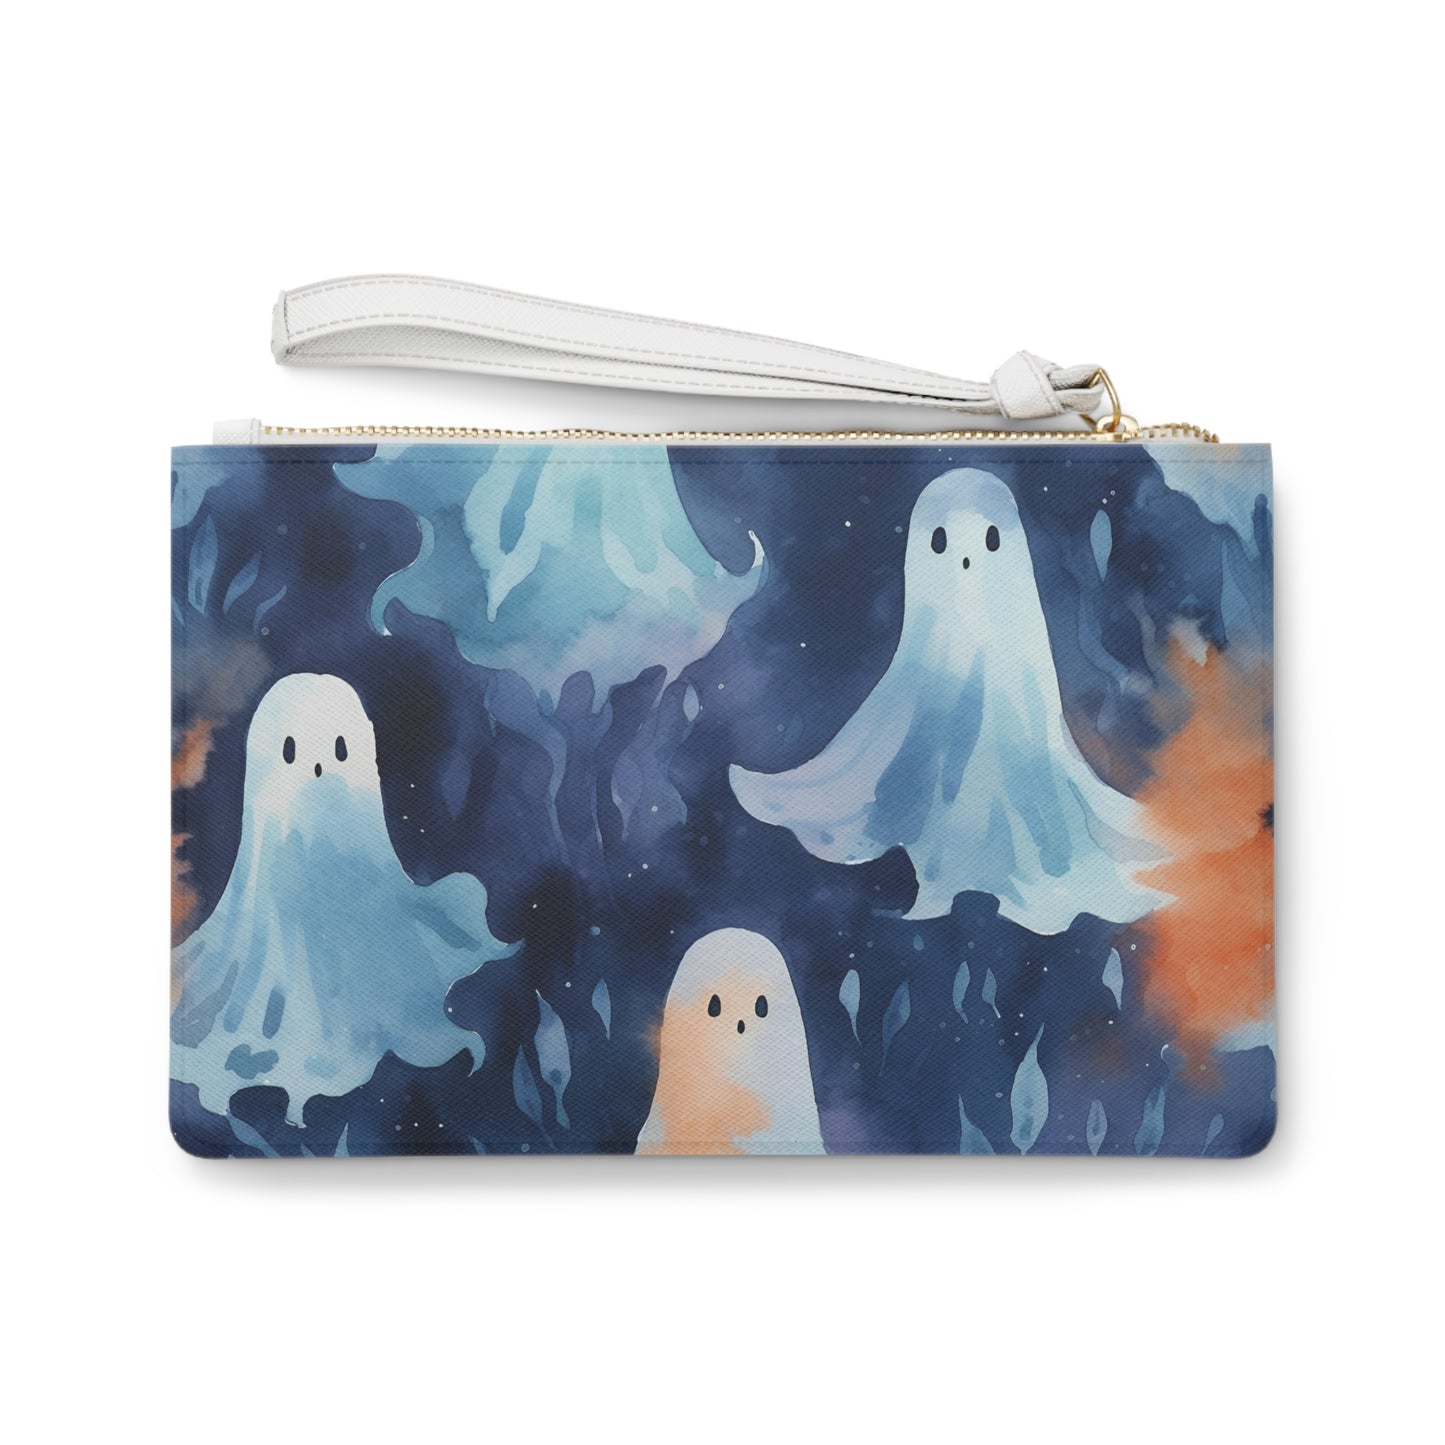 Ghosts Blue Clutch Bag